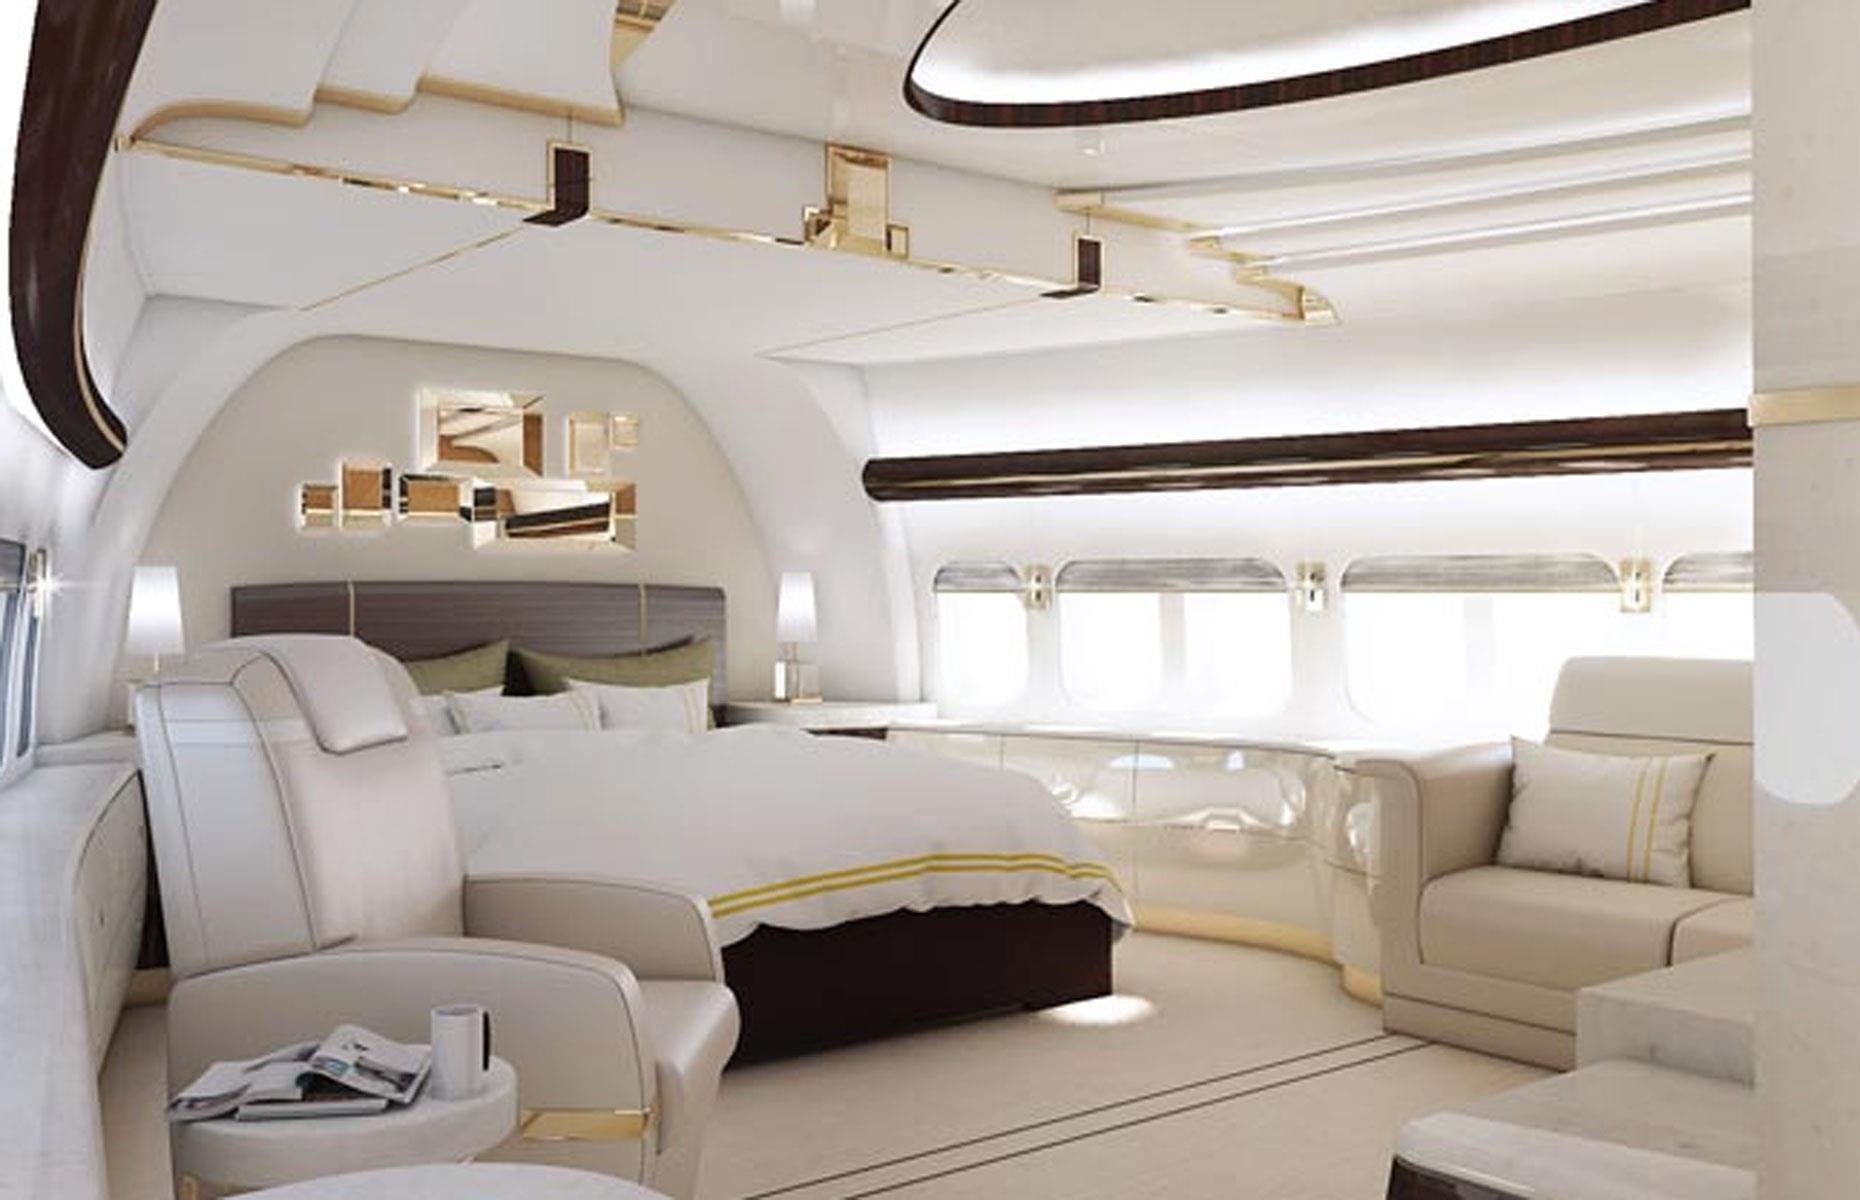 Boeing BBJ 747-8 VIP: $500 million (£363m)